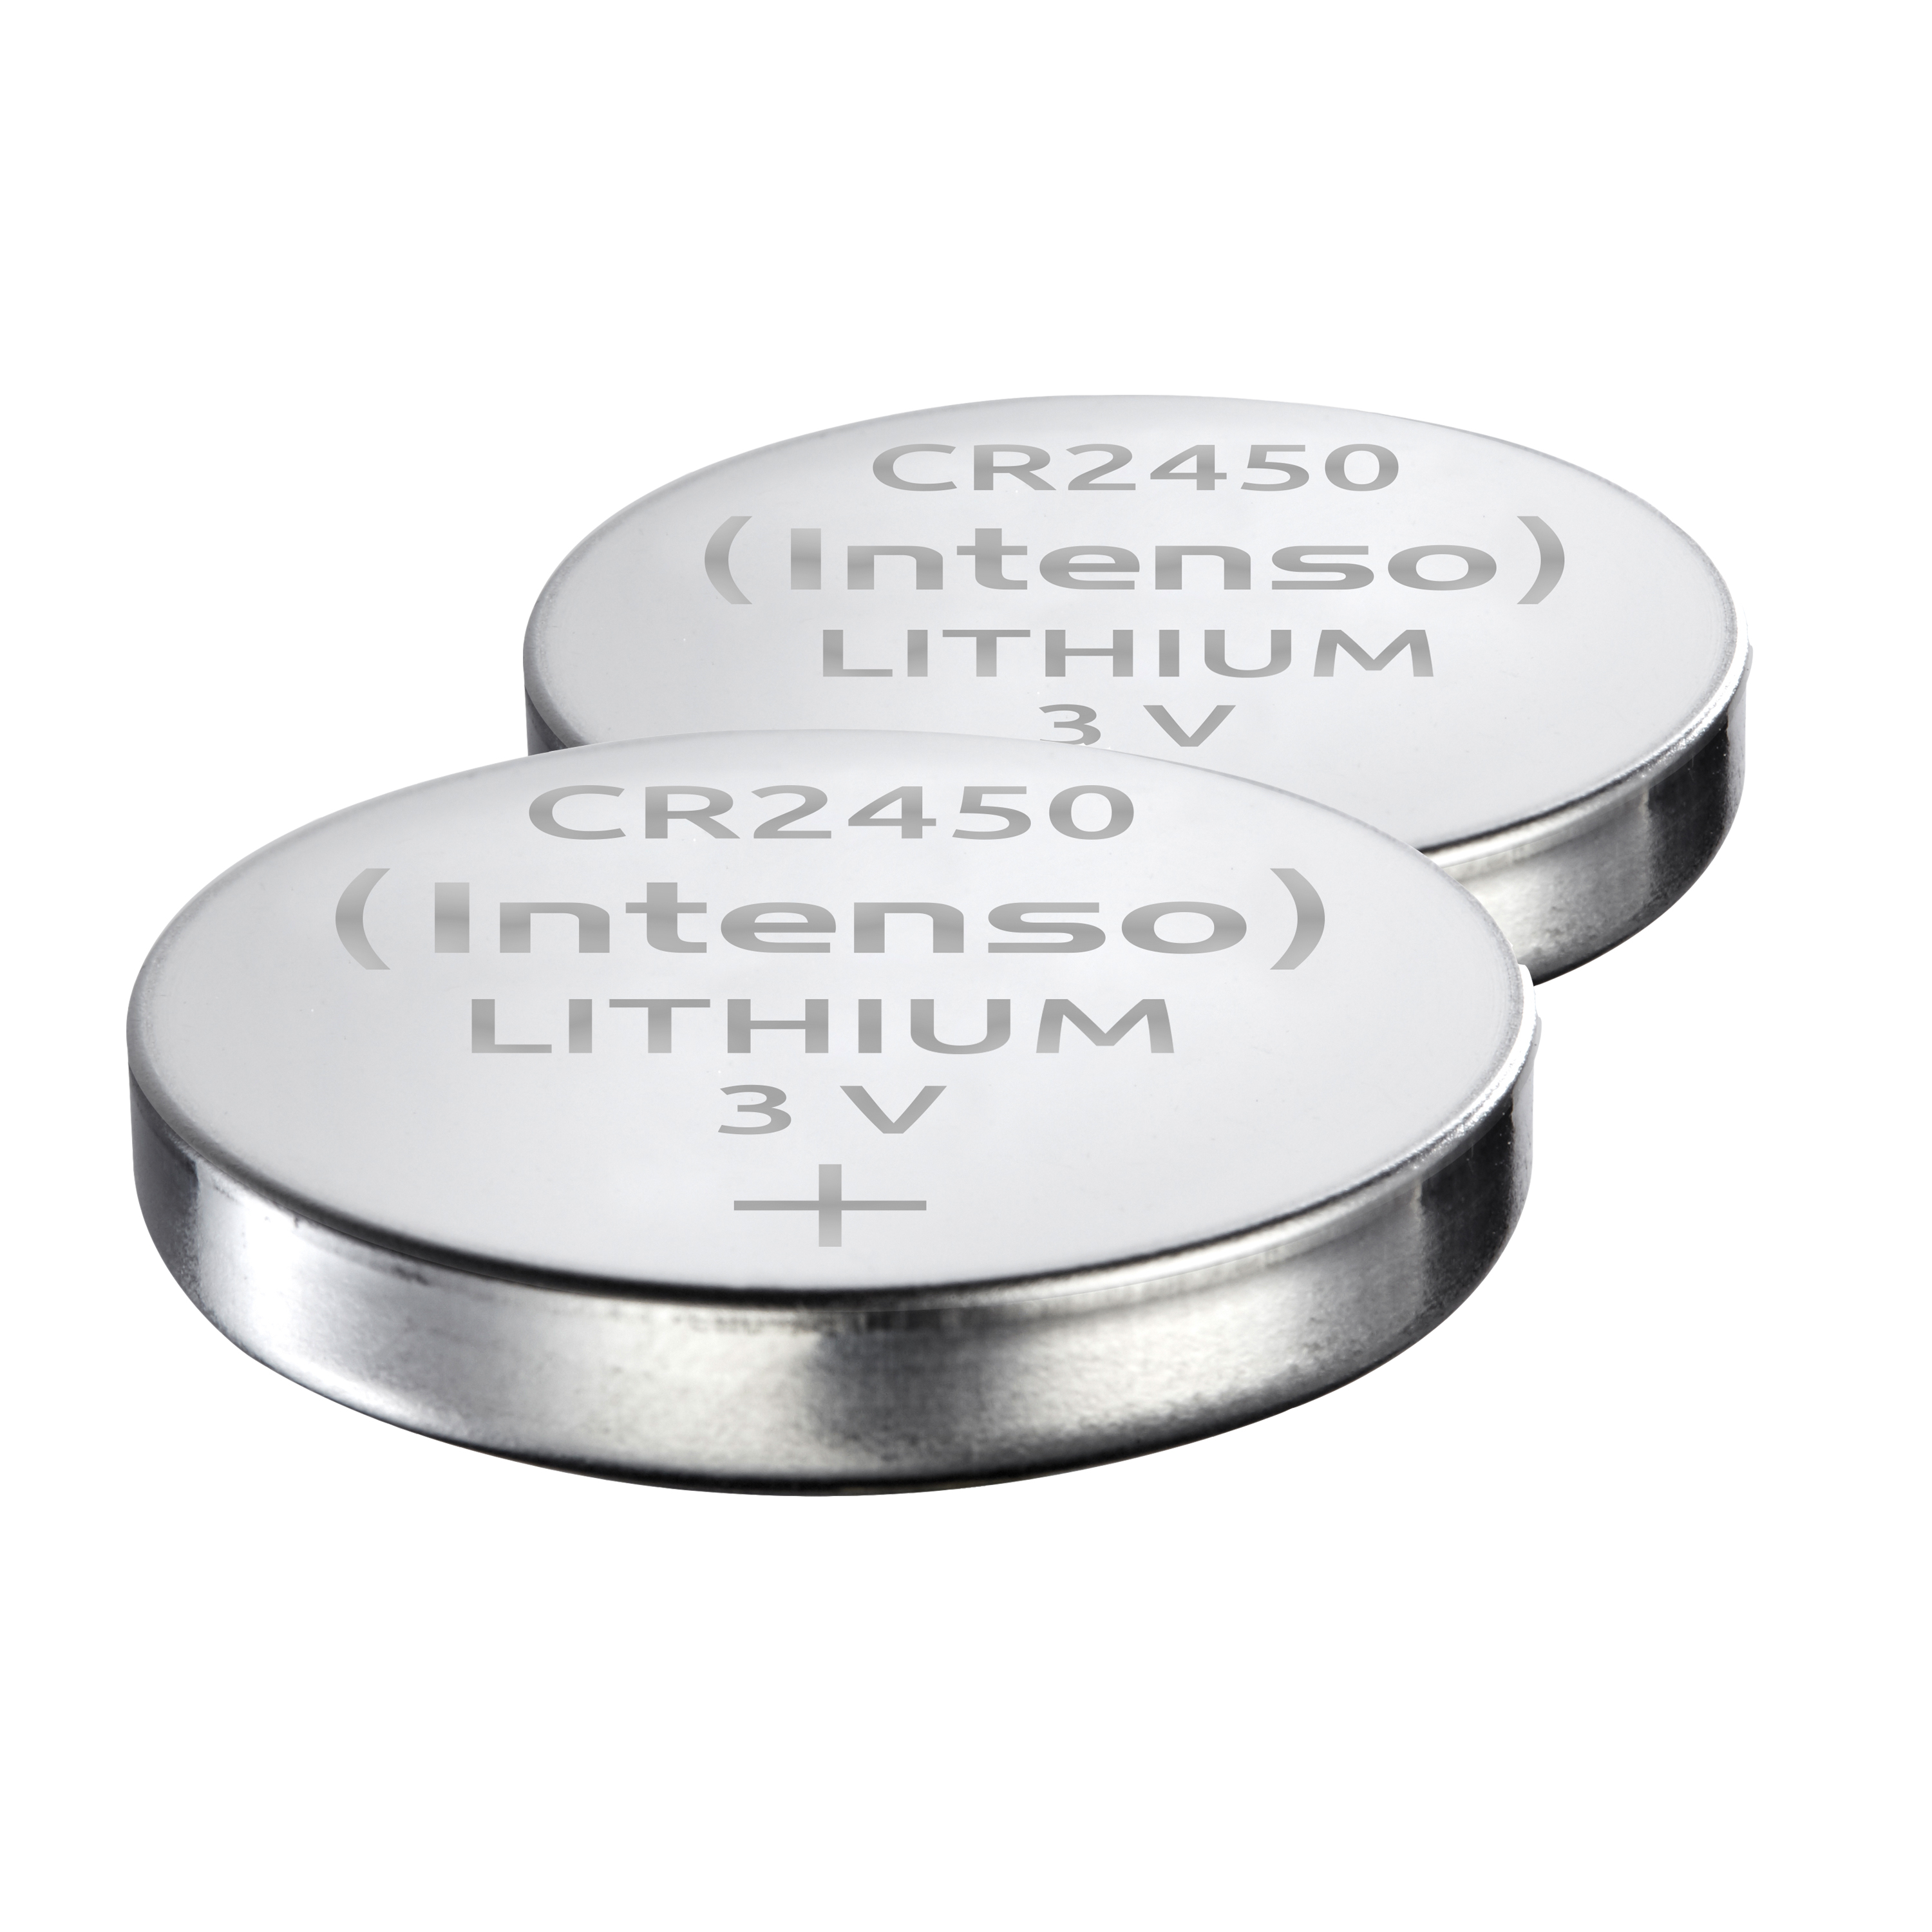 INTENSO Energy Ultra CR2450 2er von Blei) Quecksilber, Batterie Cadmium, CR2450 Knopfzelle Lithium Pack (frei